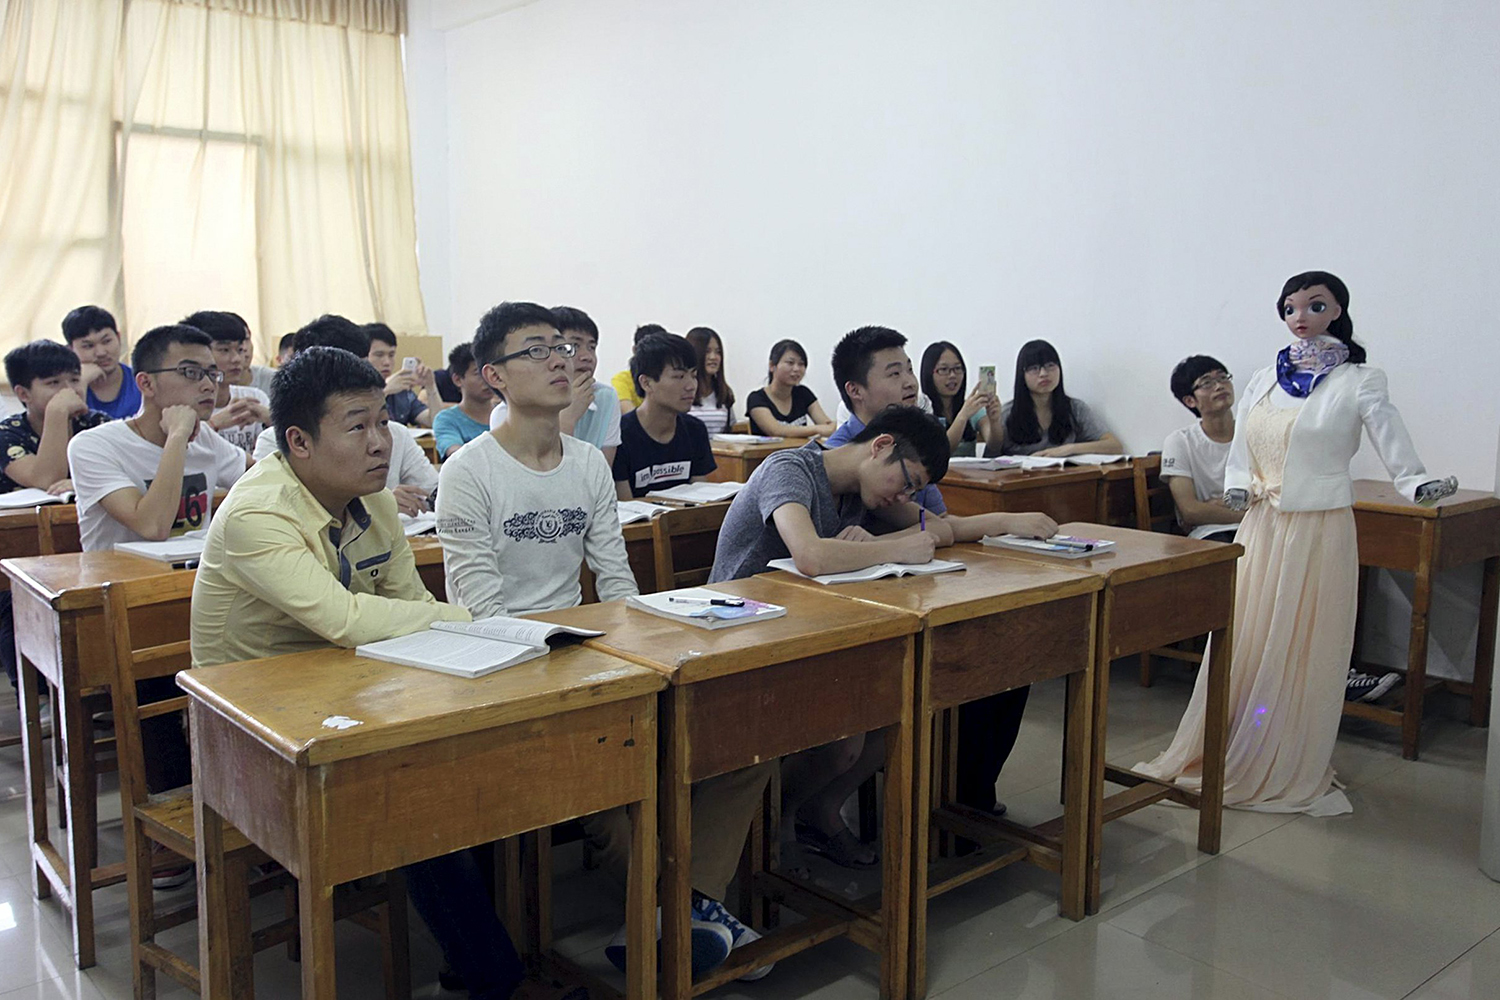 Un robot imparte clases en la Universidad Jiujiang.